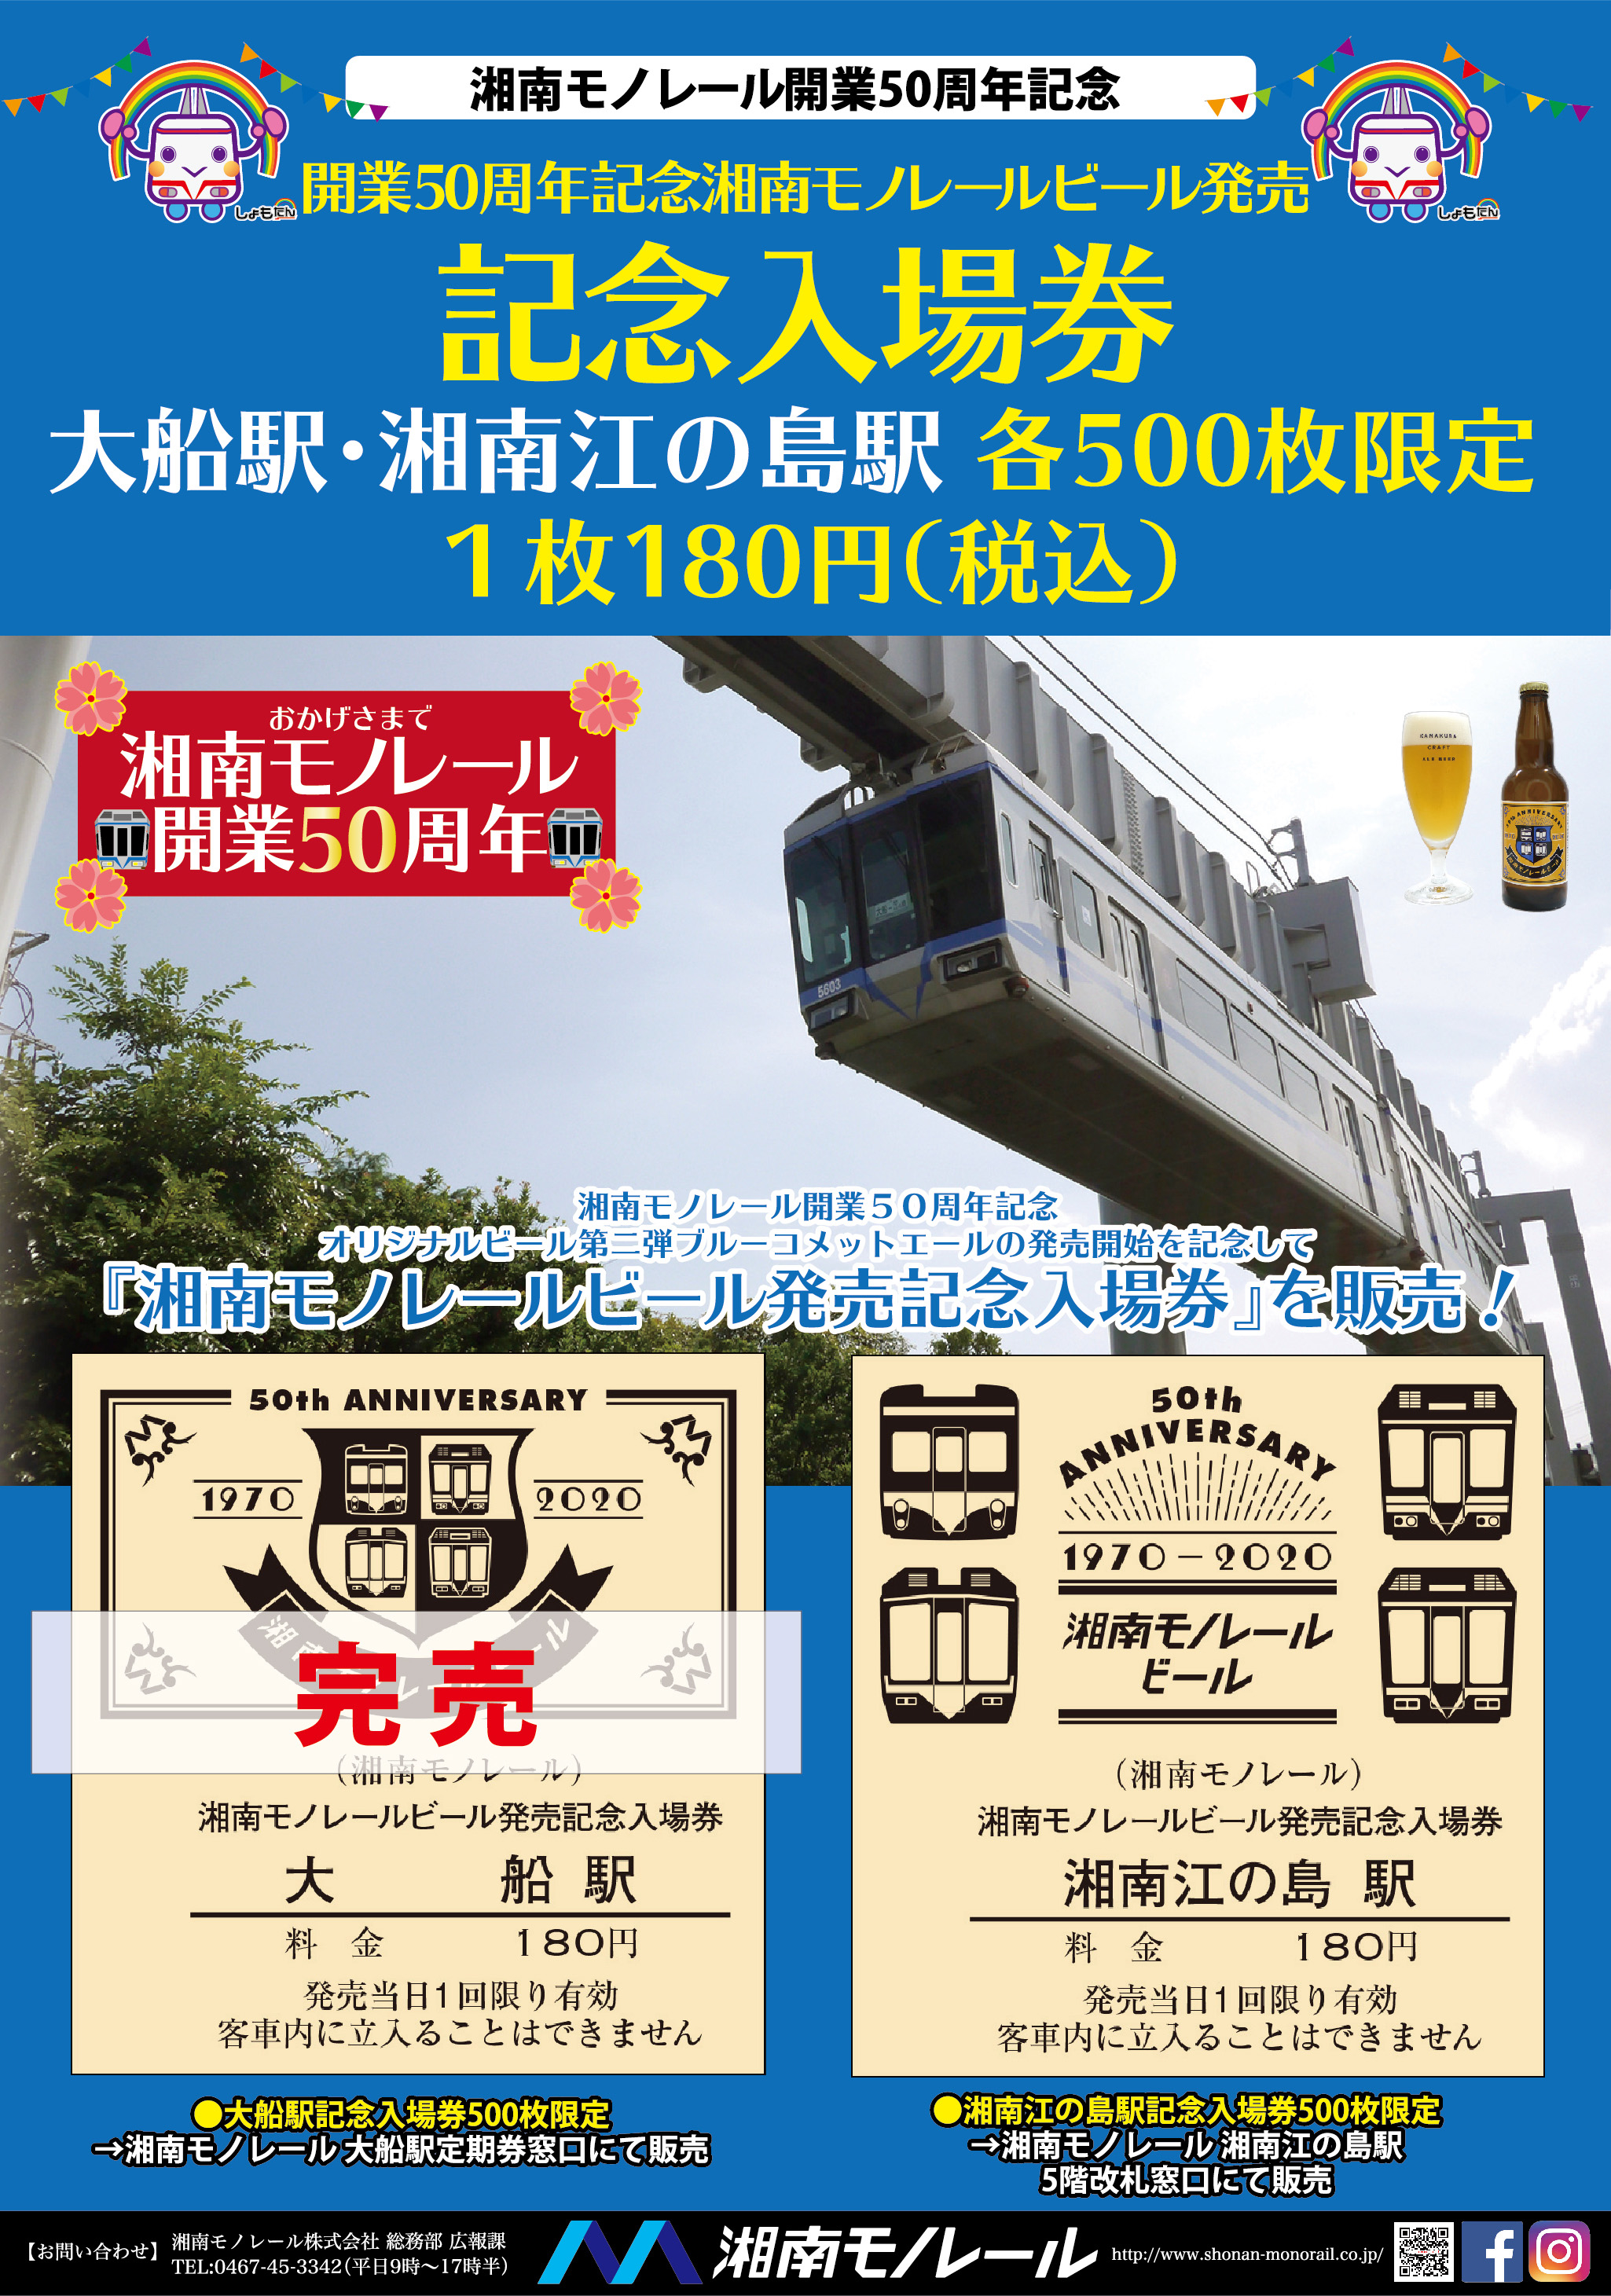 https://www.shonan-monorail.co.jp/news/upload/e6128b1248c8942cb3d95373bf6632a1a1c8d8da.jpg